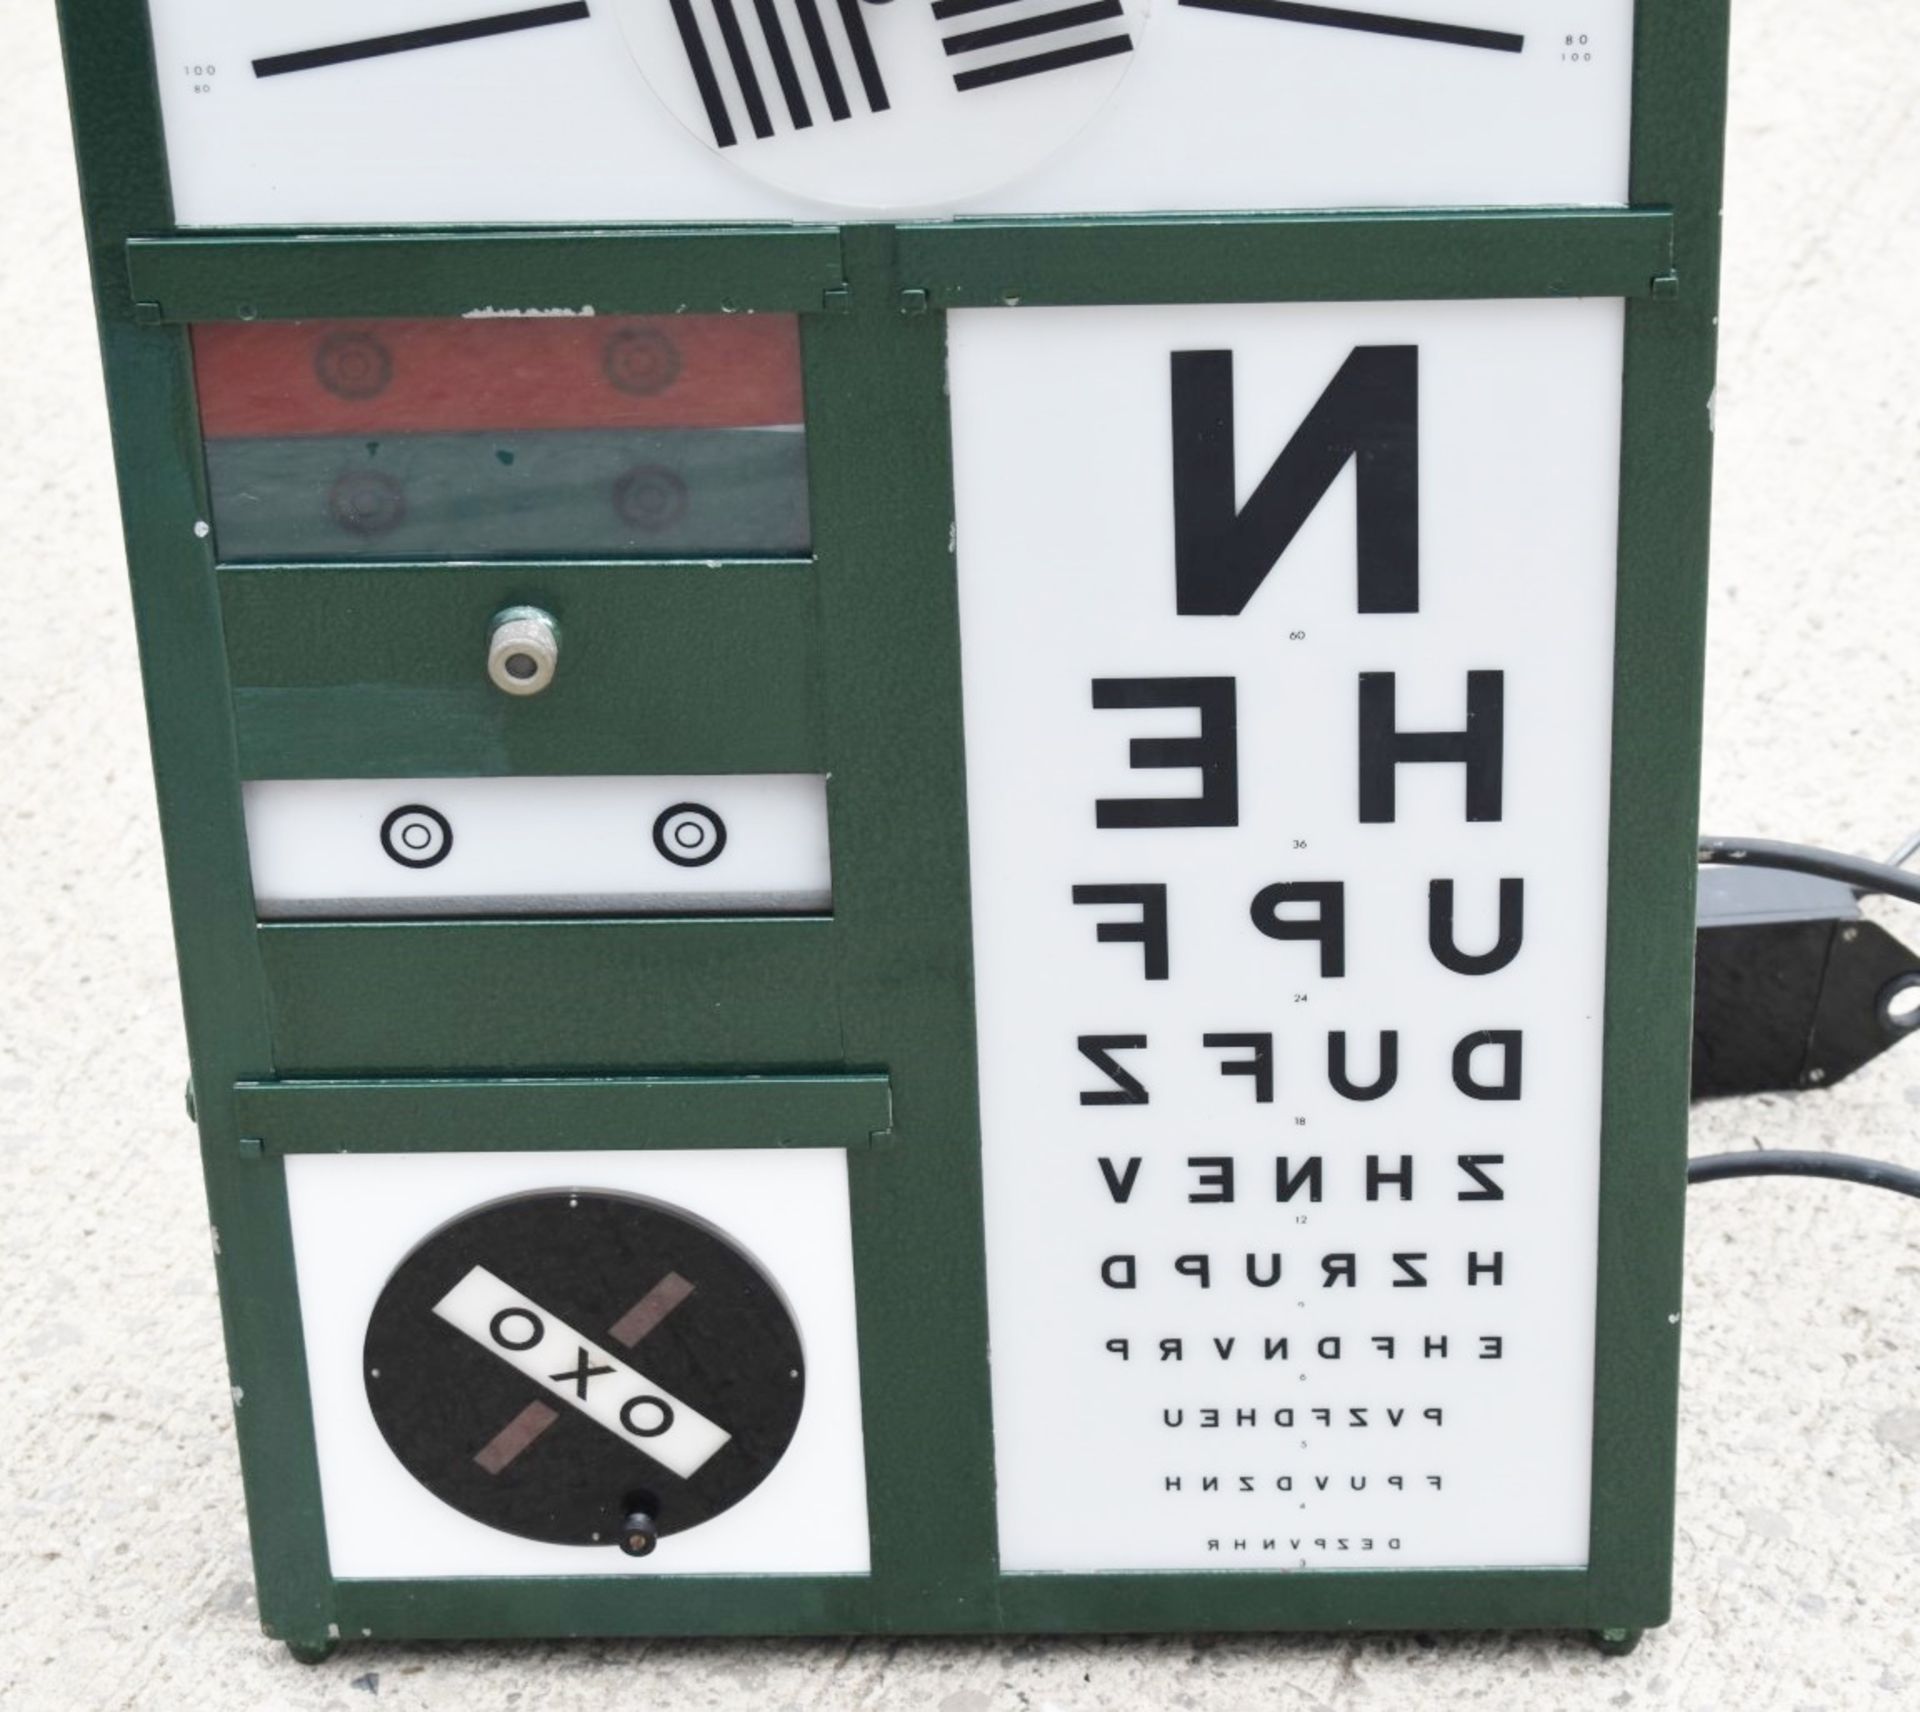 1 x Opticians Vintage Eye Test Chart Light Box - 240v - Size H82 x W46 xD19 cms - Ref: GTI120 - - Image 4 of 8